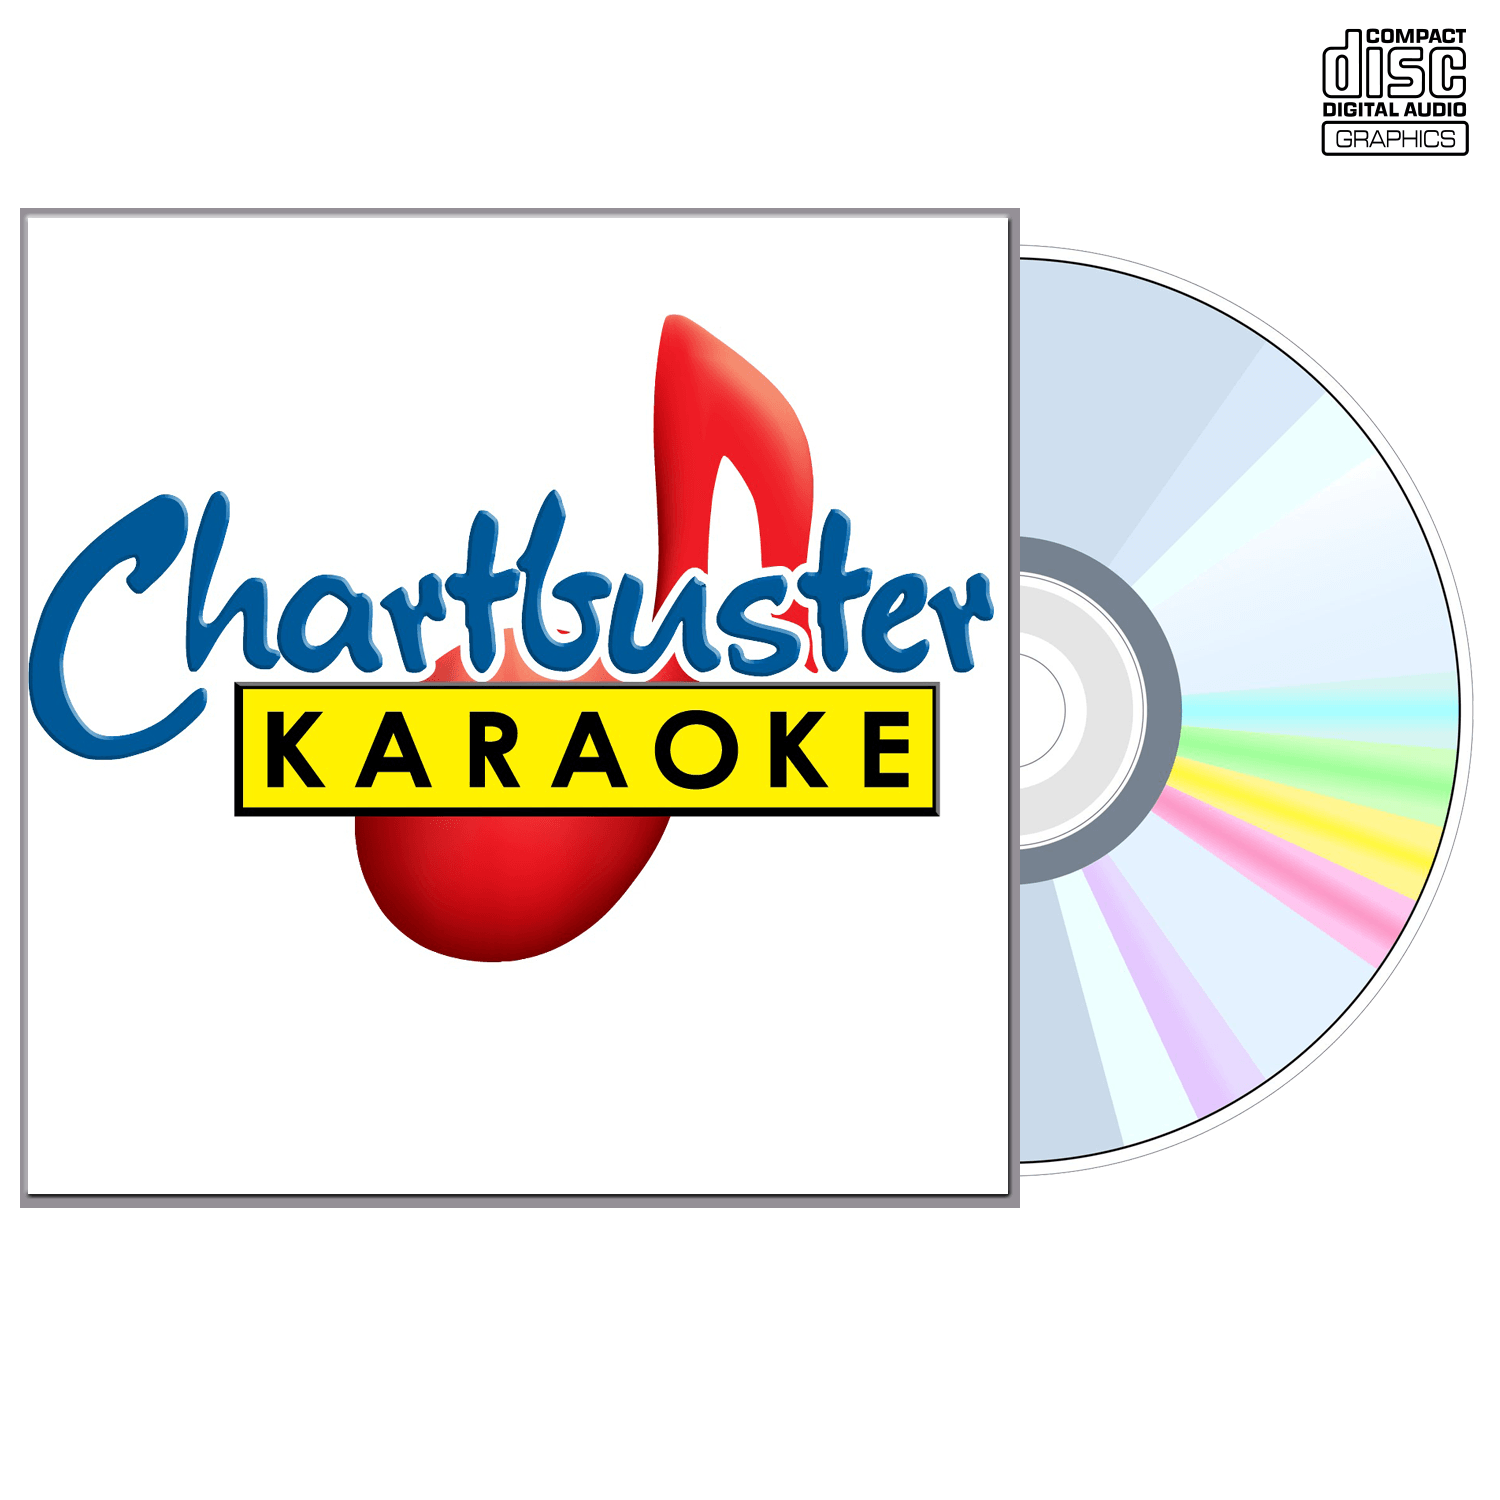 70's Collection Vol 11 - CD+G - Chartbuster Karaoke - Karaoke Home Entertainment